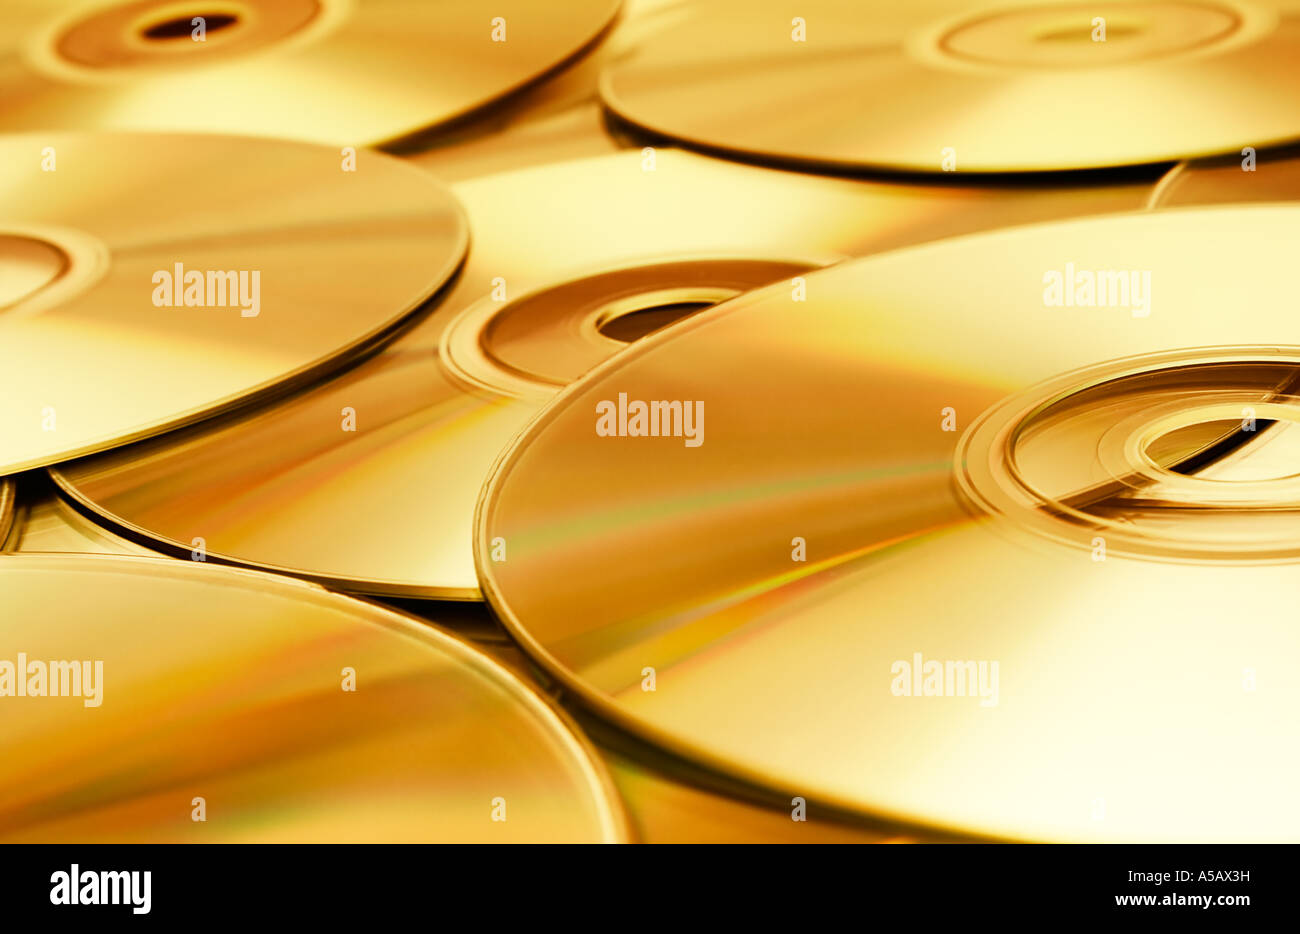 Golden discs background. Stock Photo